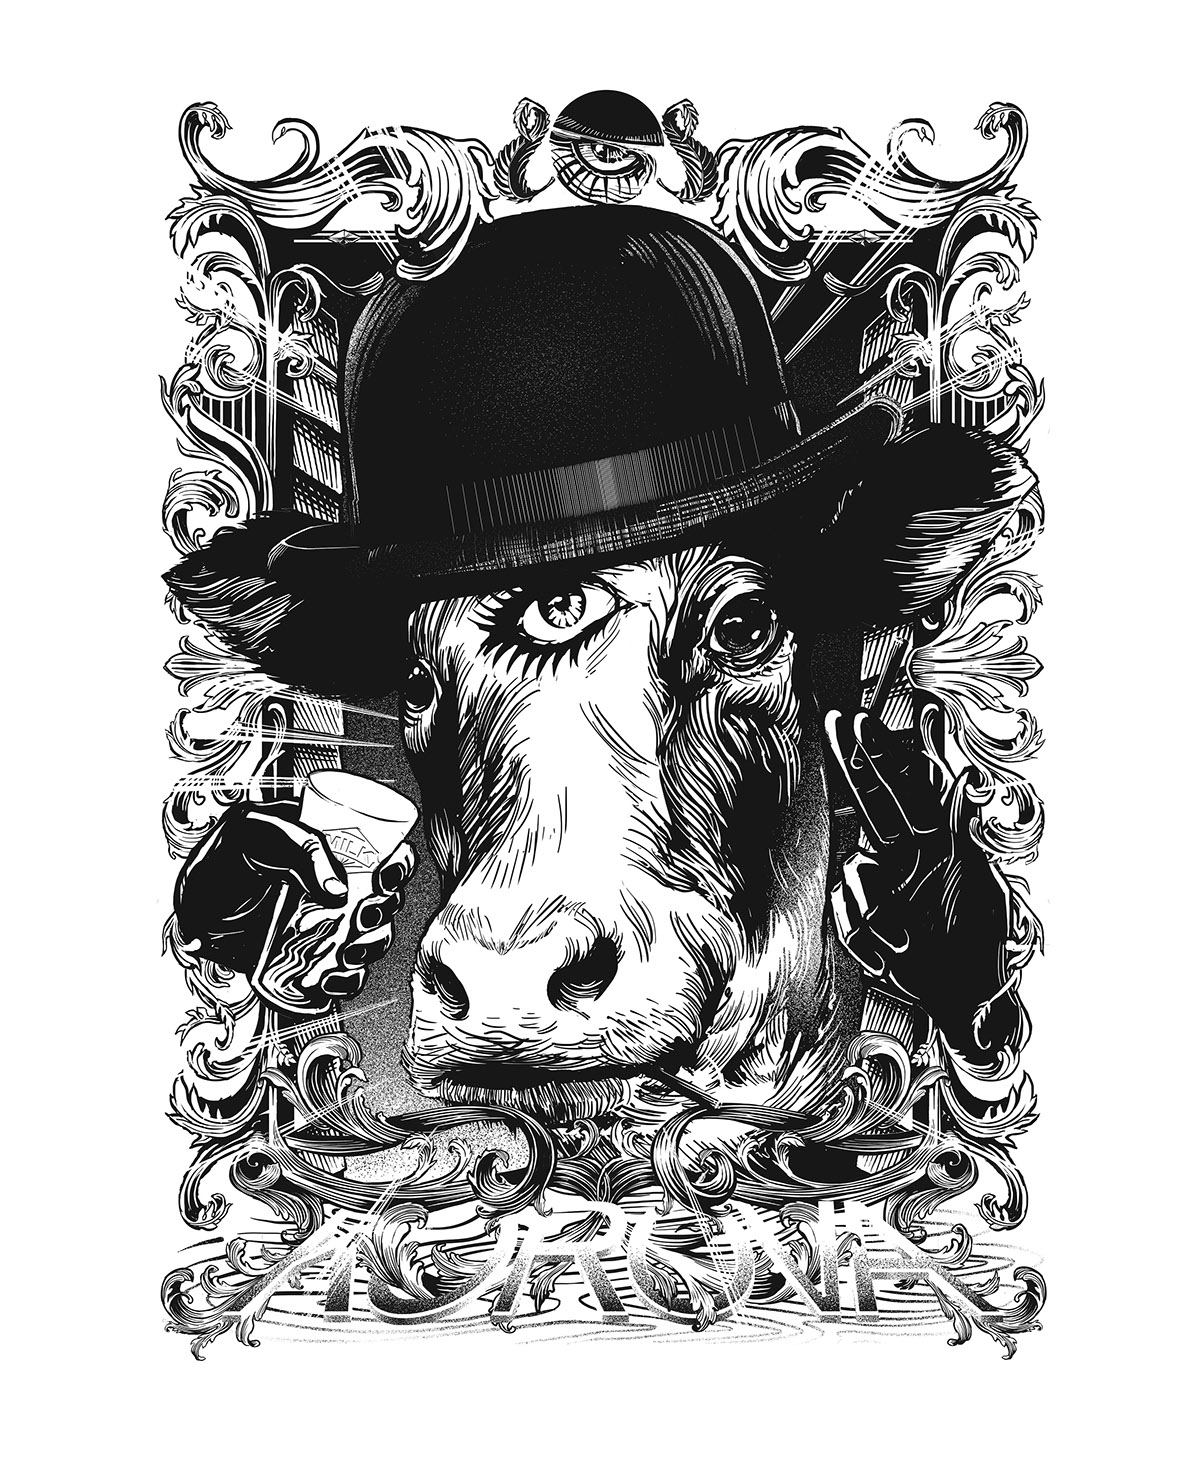 Korova cow t-shirt